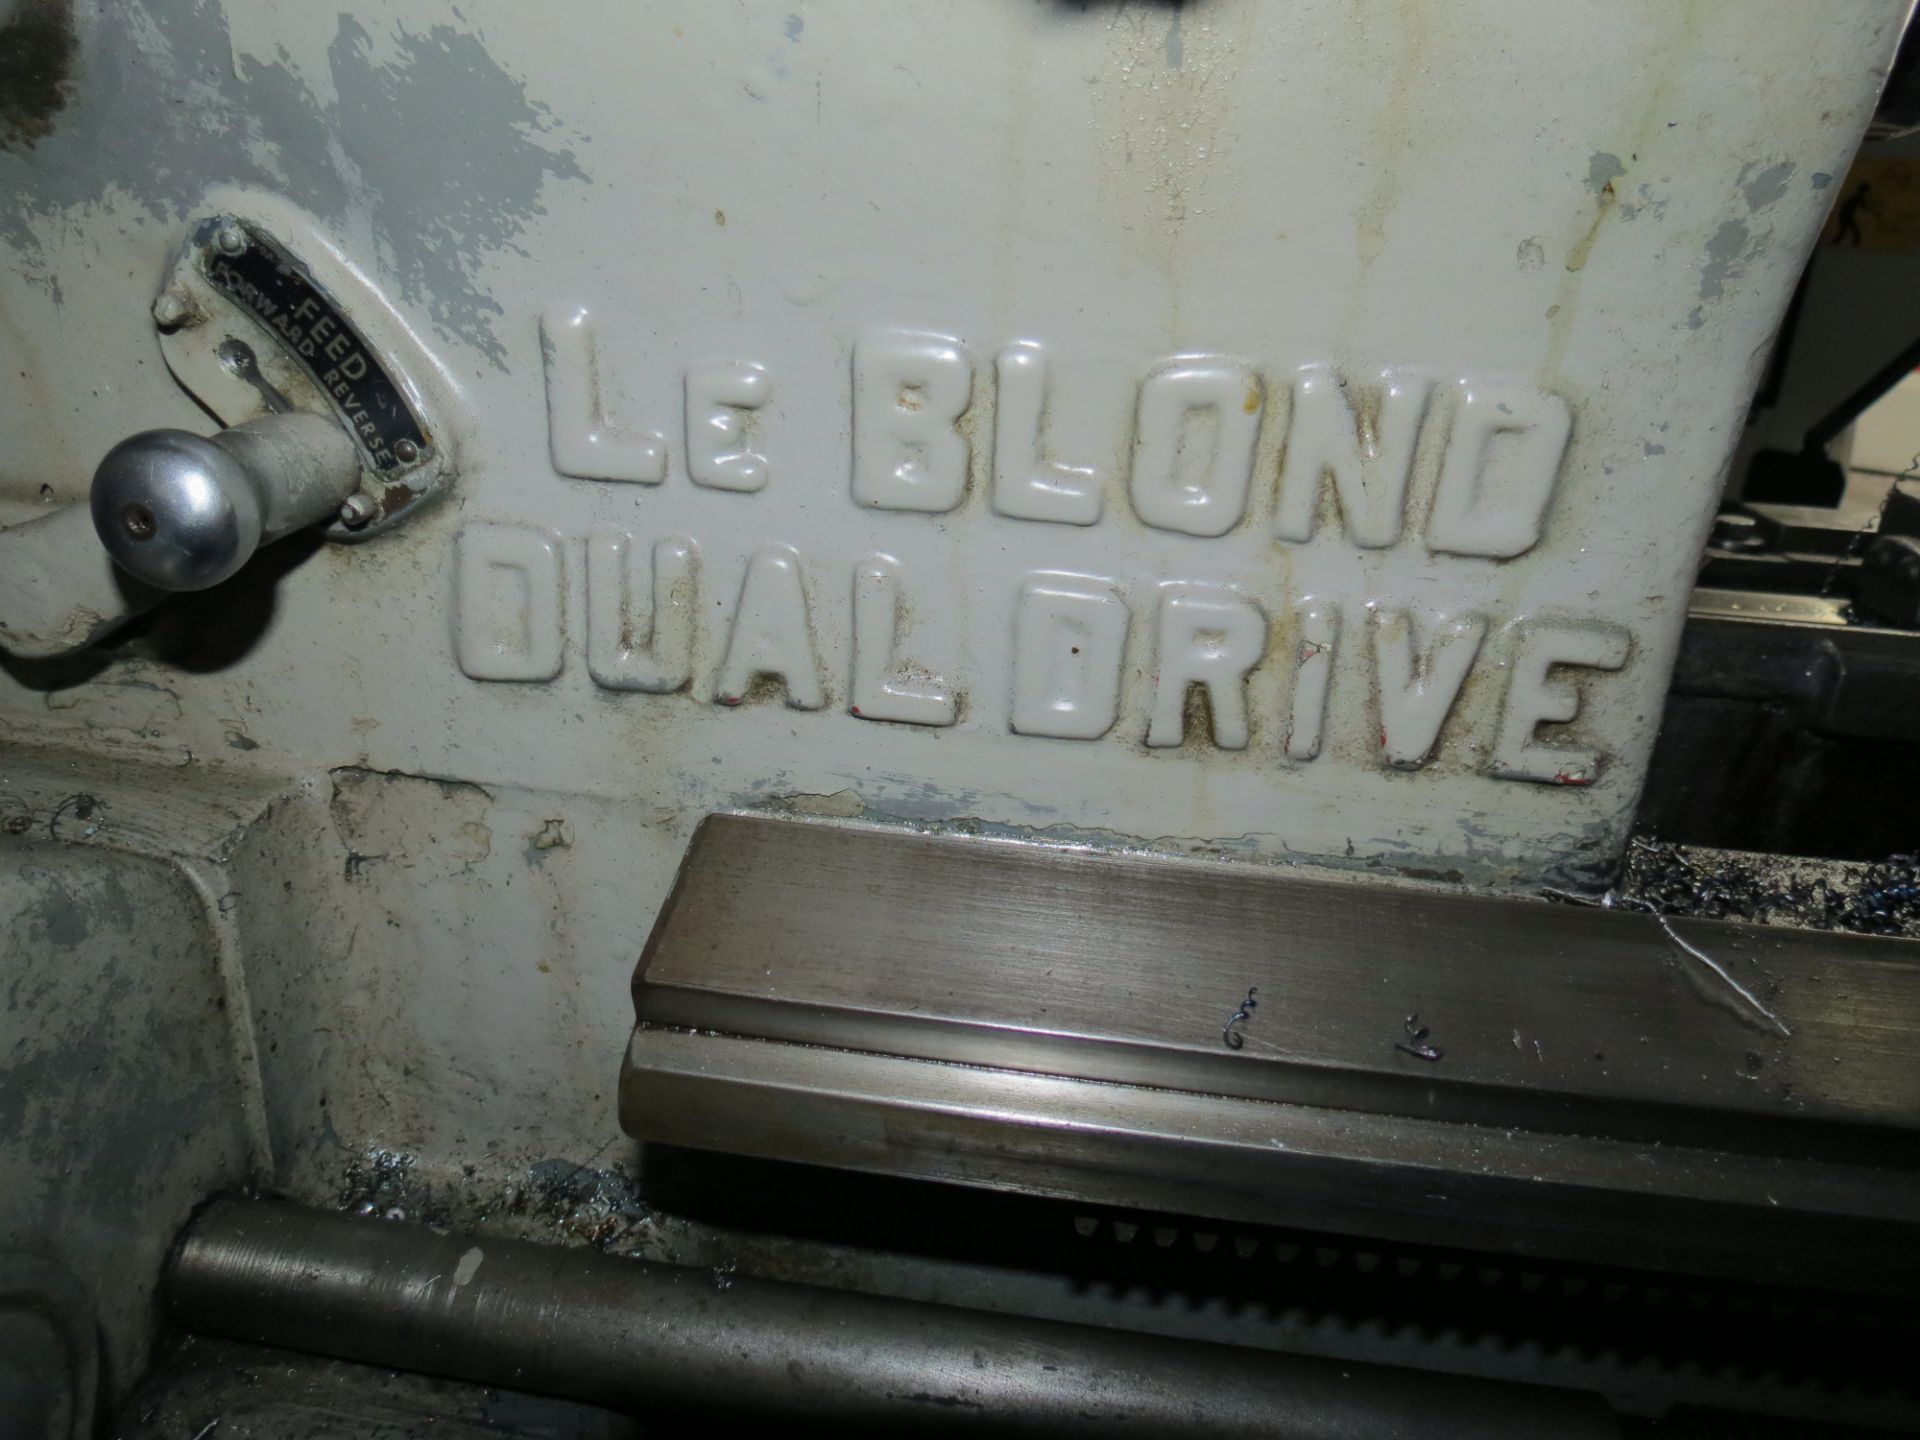 LE BLOND DUAL DRIVE LATHE - Image 3 of 4